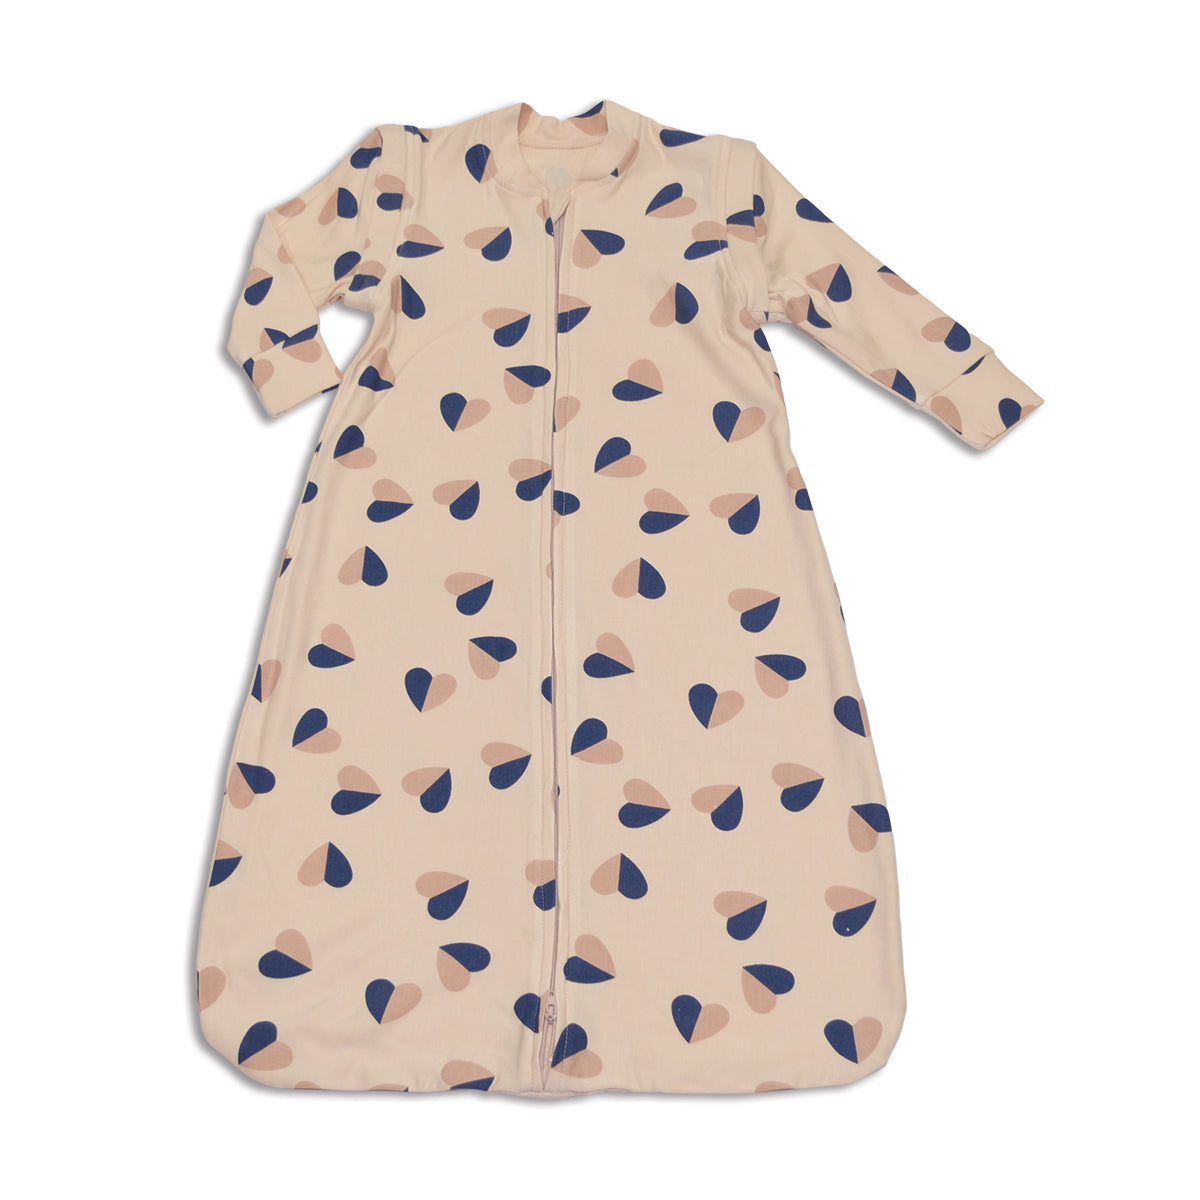 Bamboo Fleece Sleeping Sack w/Detachable Sleeves (Heart Flutter Print) 0.5 Tog